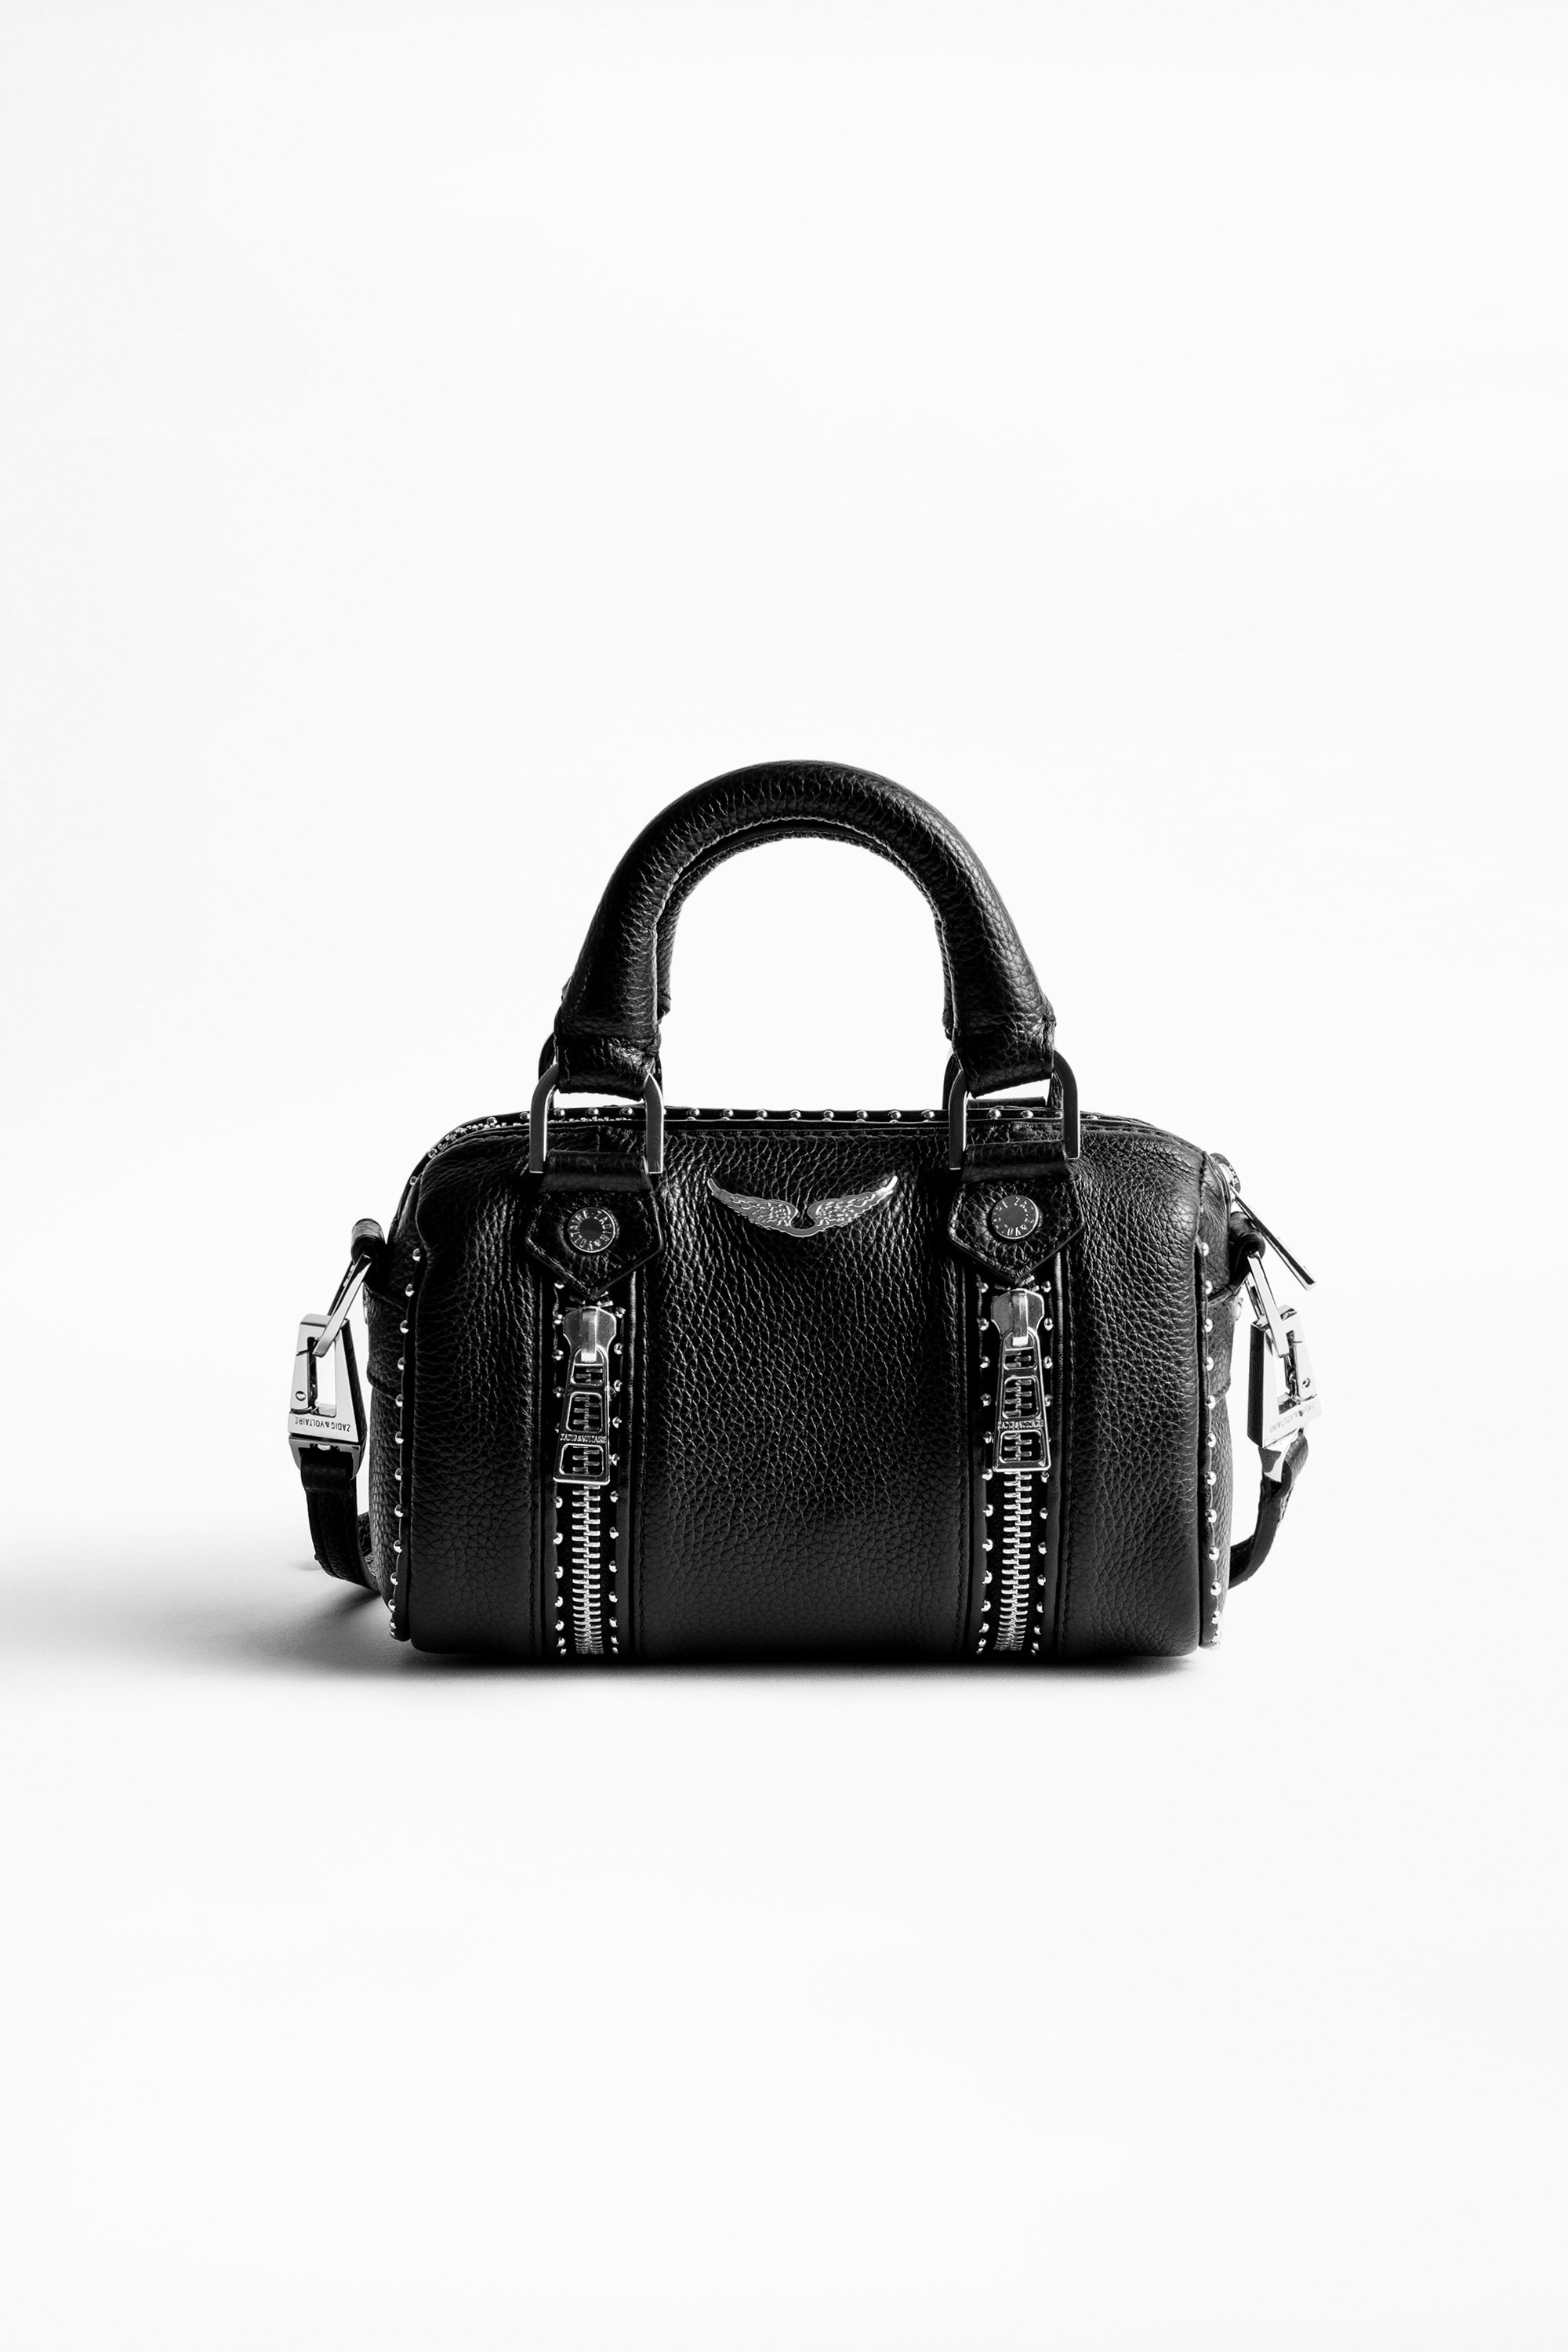 Sunny Nano Studs Bag Women's black mini bag in grained leather.